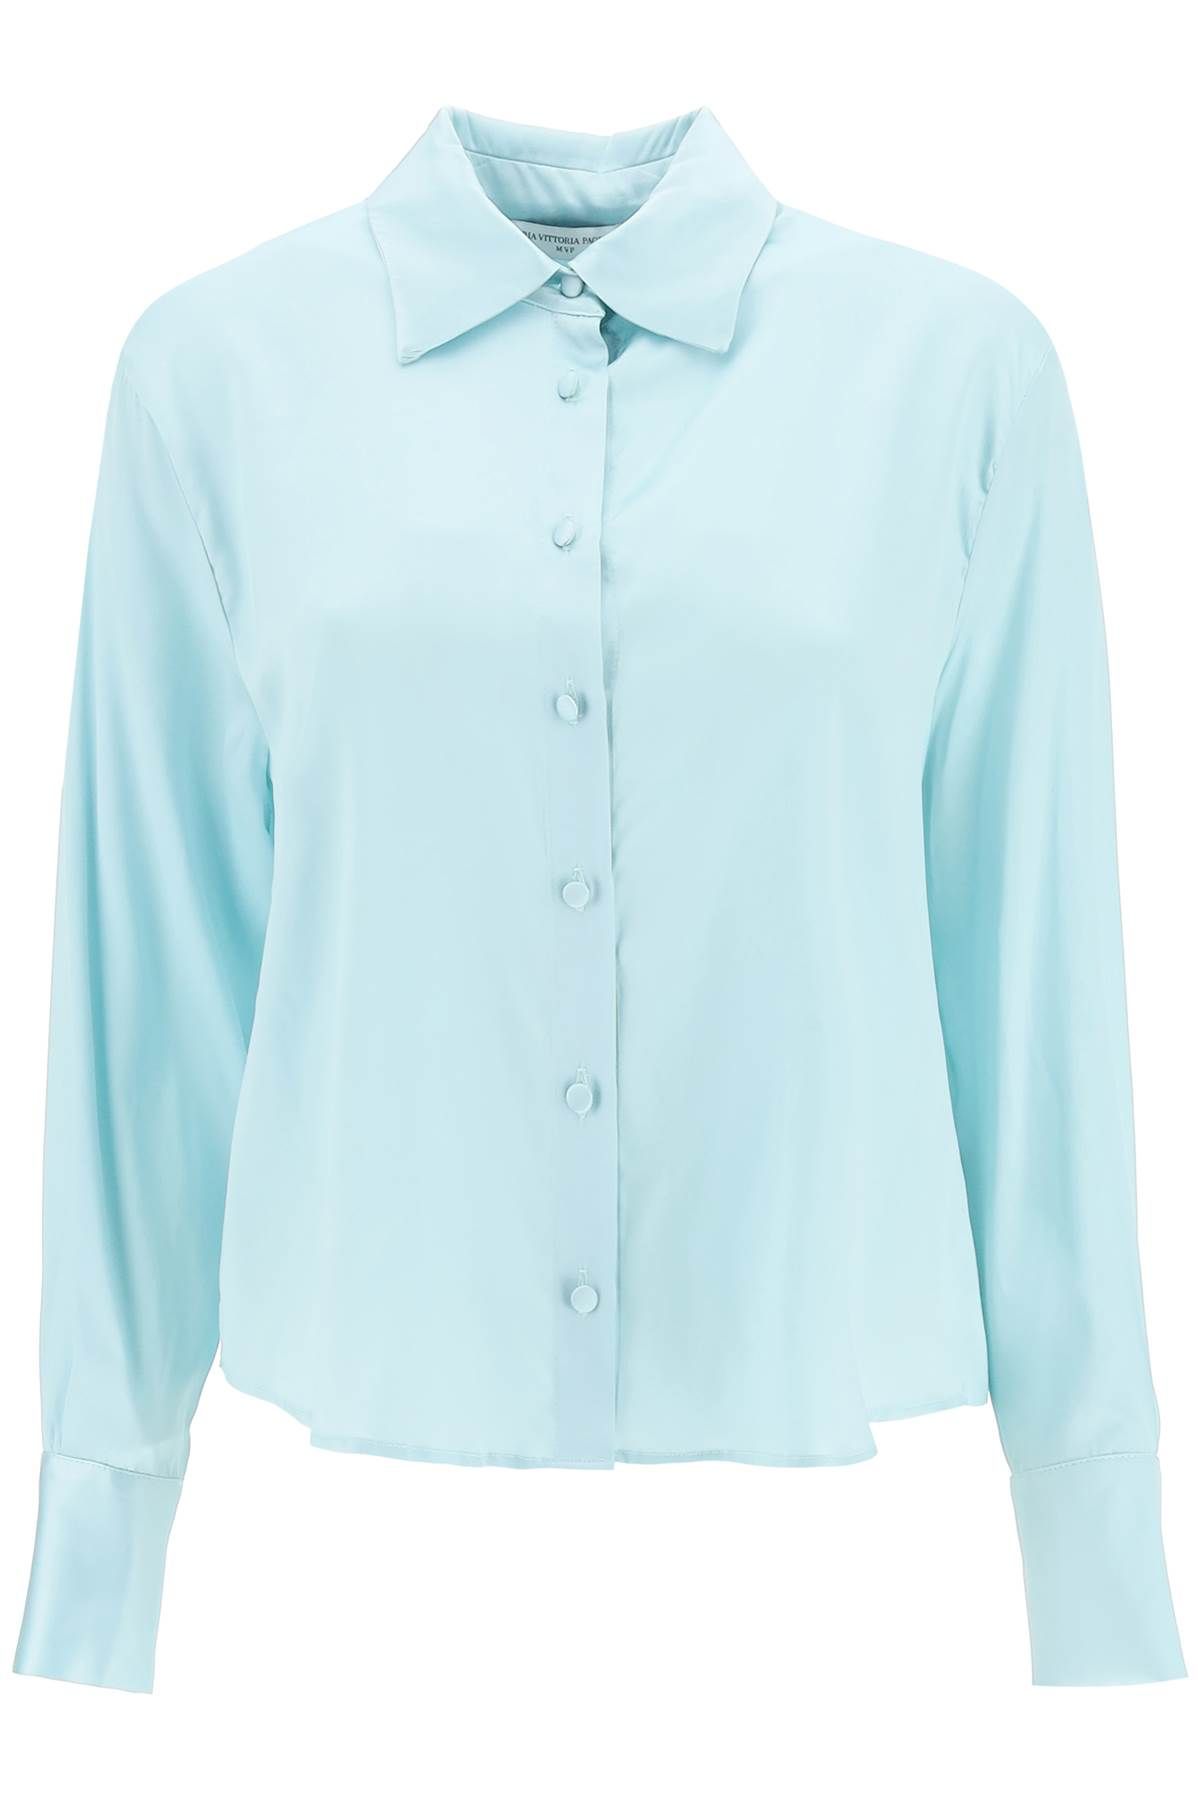 Shop Mvp Wardrobe Sunset Boulevard Satin Shirt In Light Blue